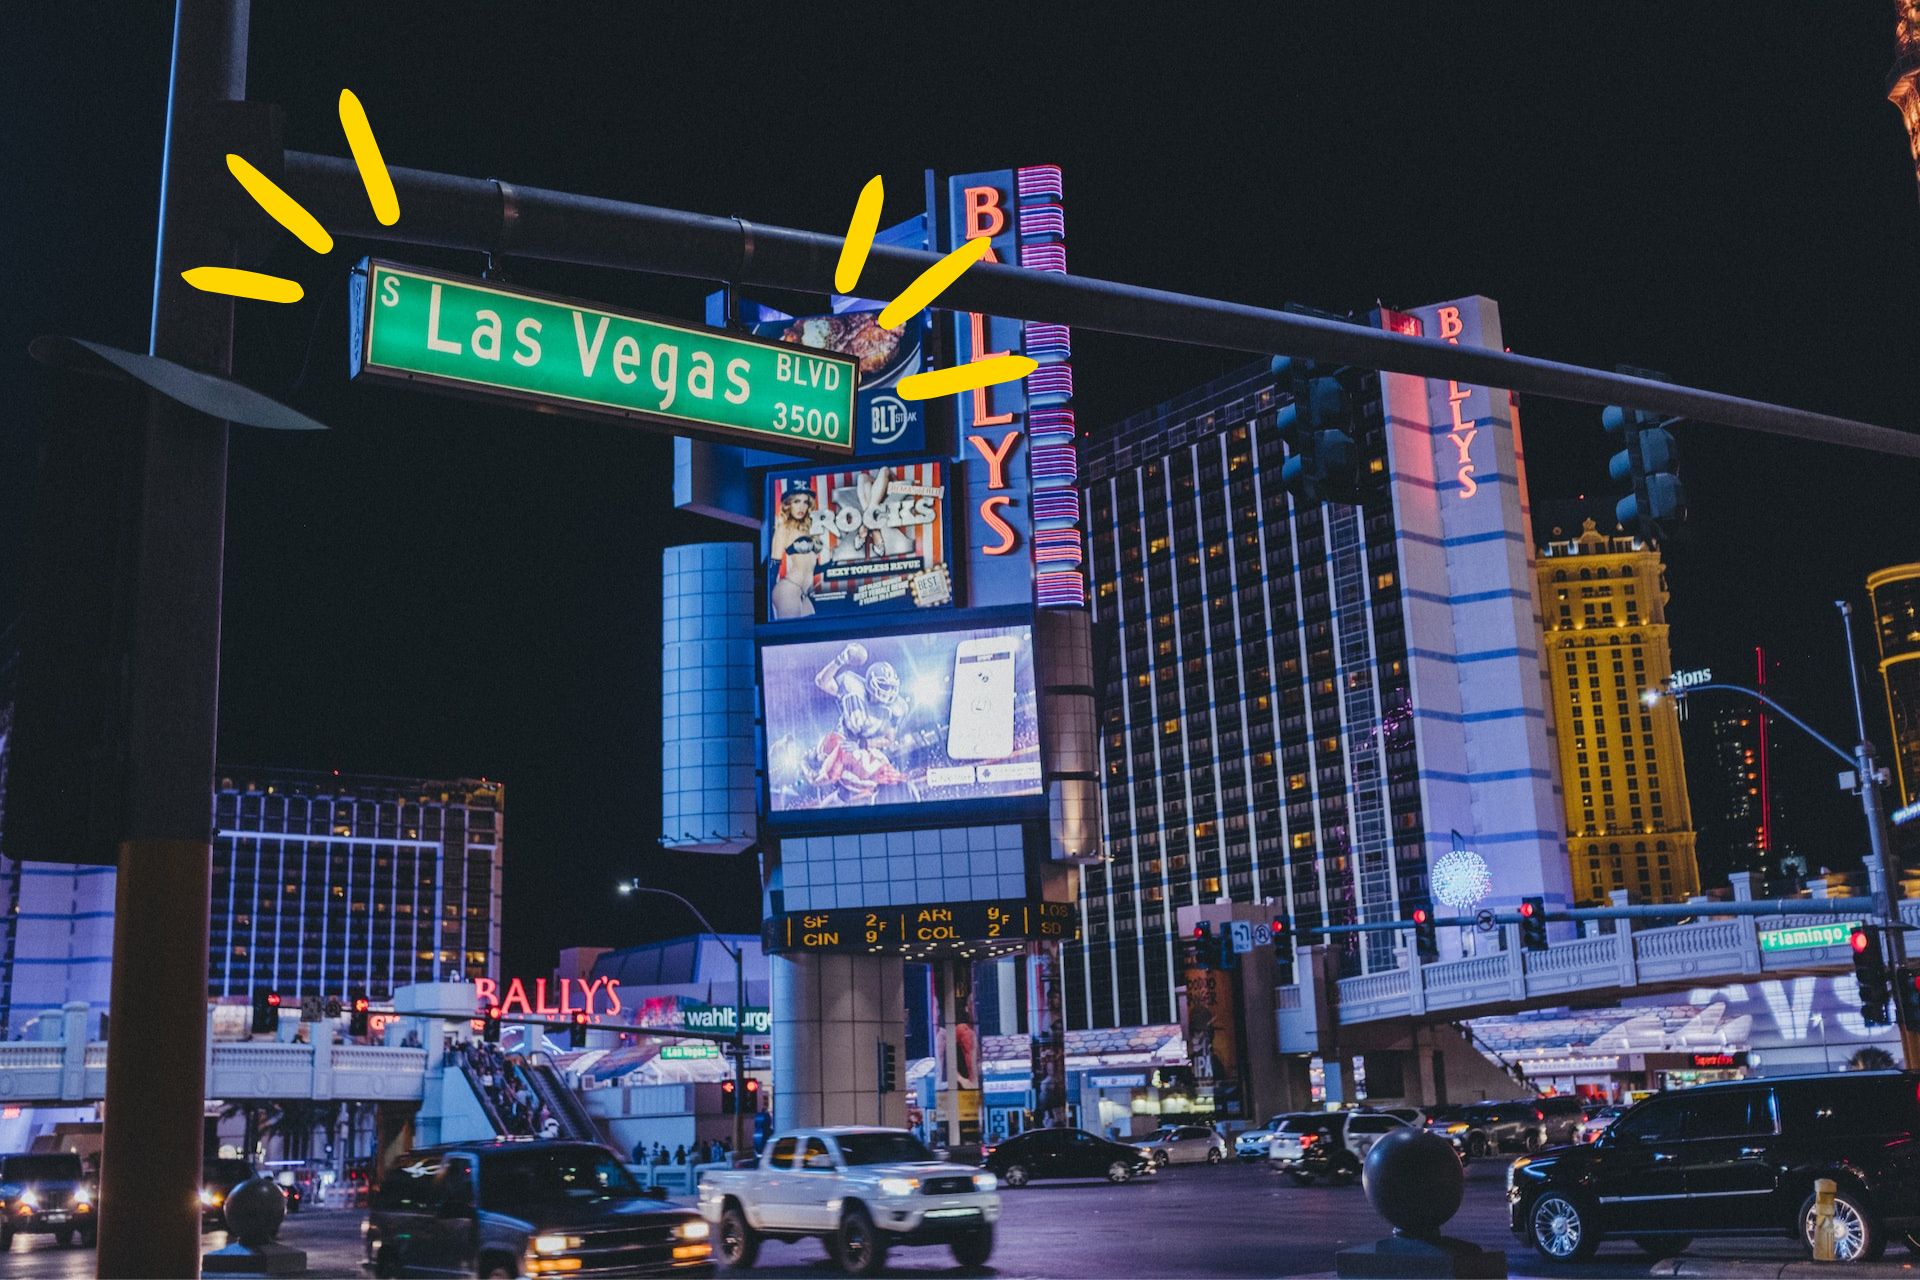 Las Vegas dress code: what to wear - Netflights Blog